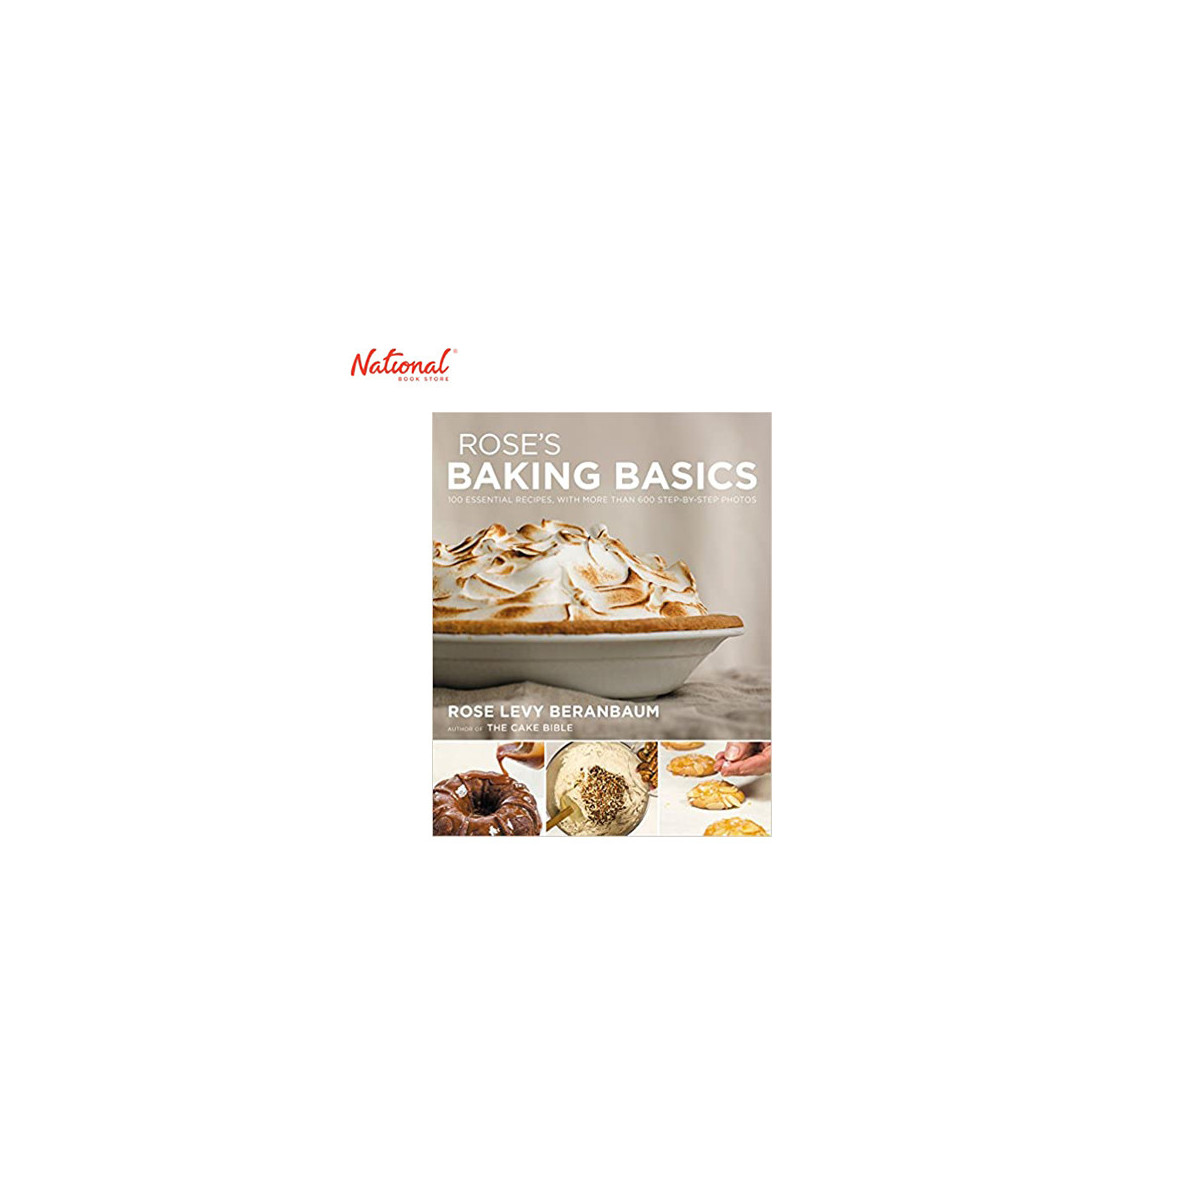 Rose's Baking Basics Hardcover by Rose Levy Beranbaum